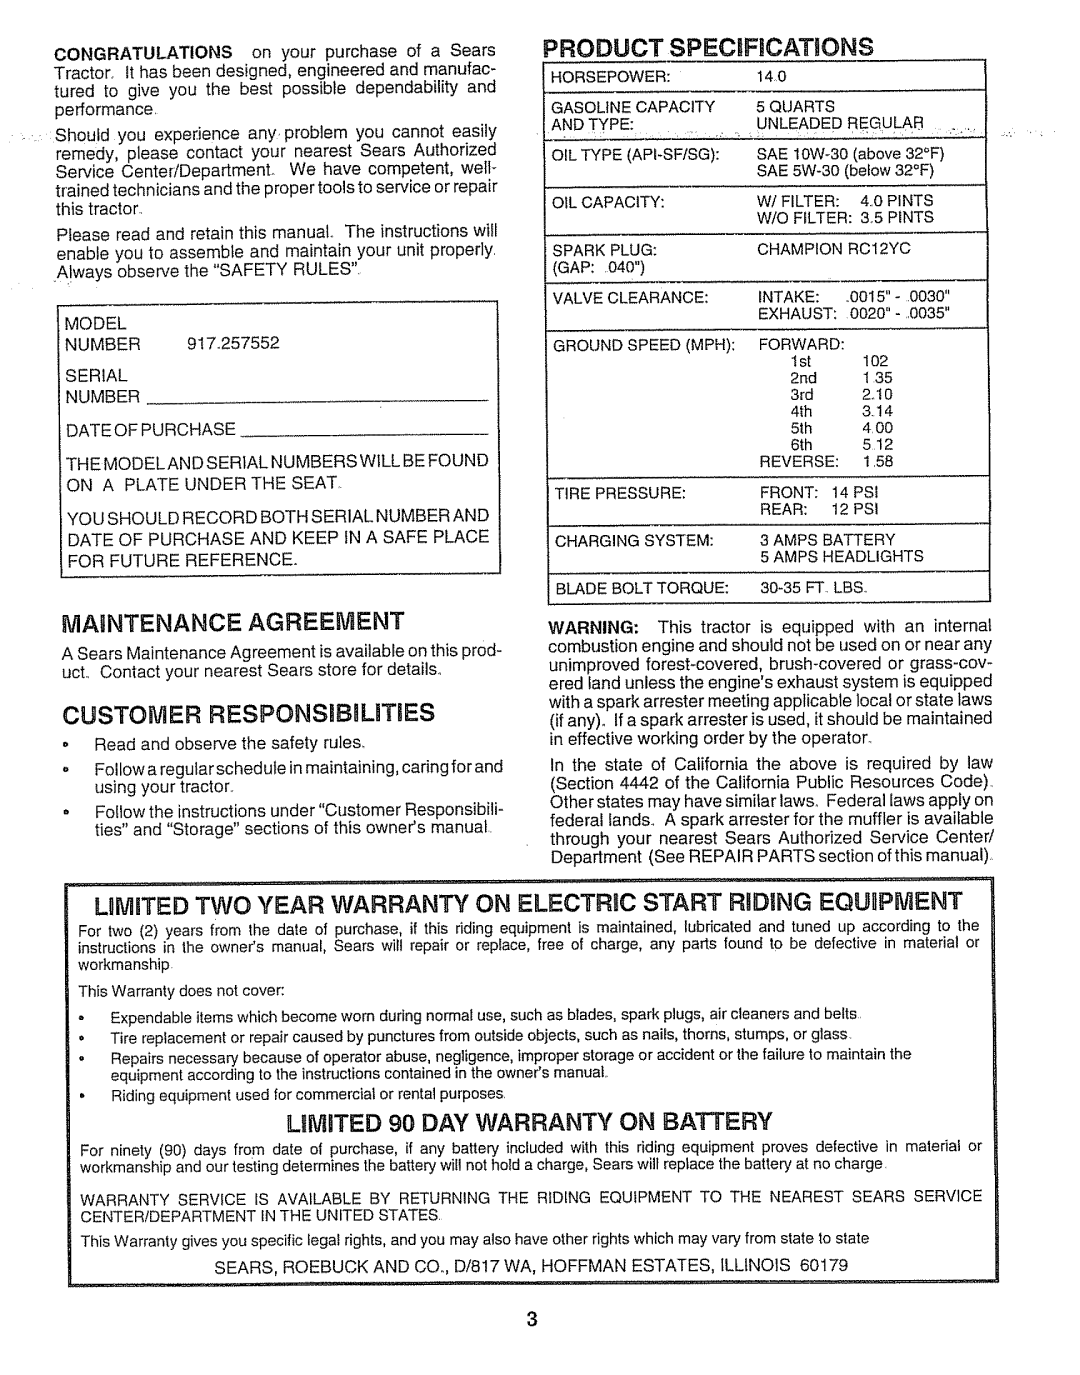 Sears 917.257552 manual MAgNTENANCE AGREEMENT, CUSTOM ER RESPONSIBnLITIES, Product Specifications 